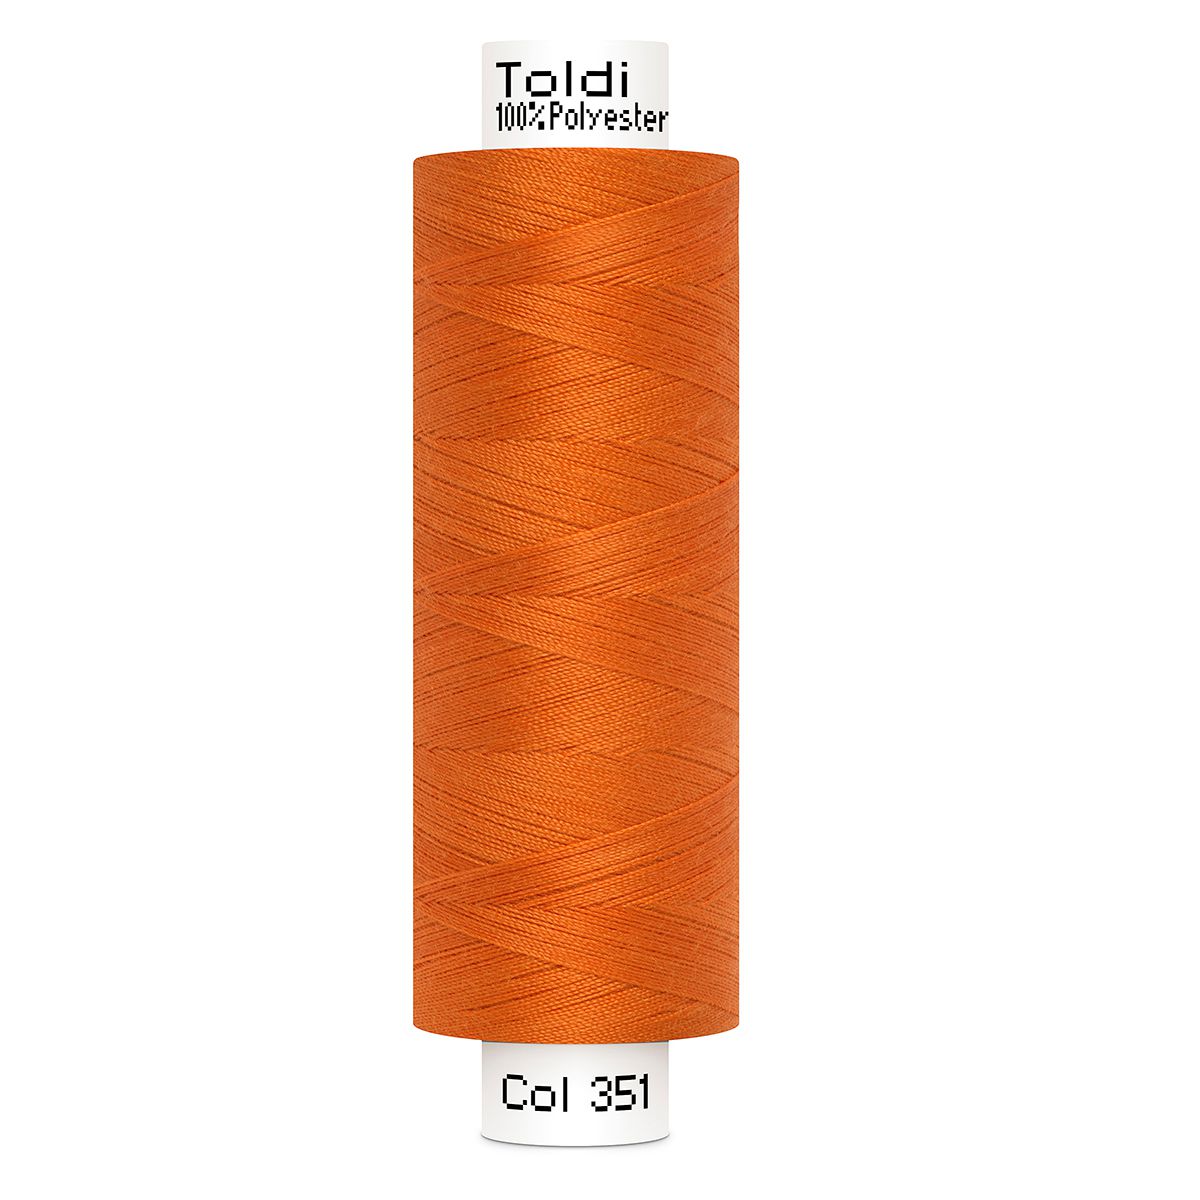 Gütermann Toldi Allesnähergarn 500 m Farbe 351 orange